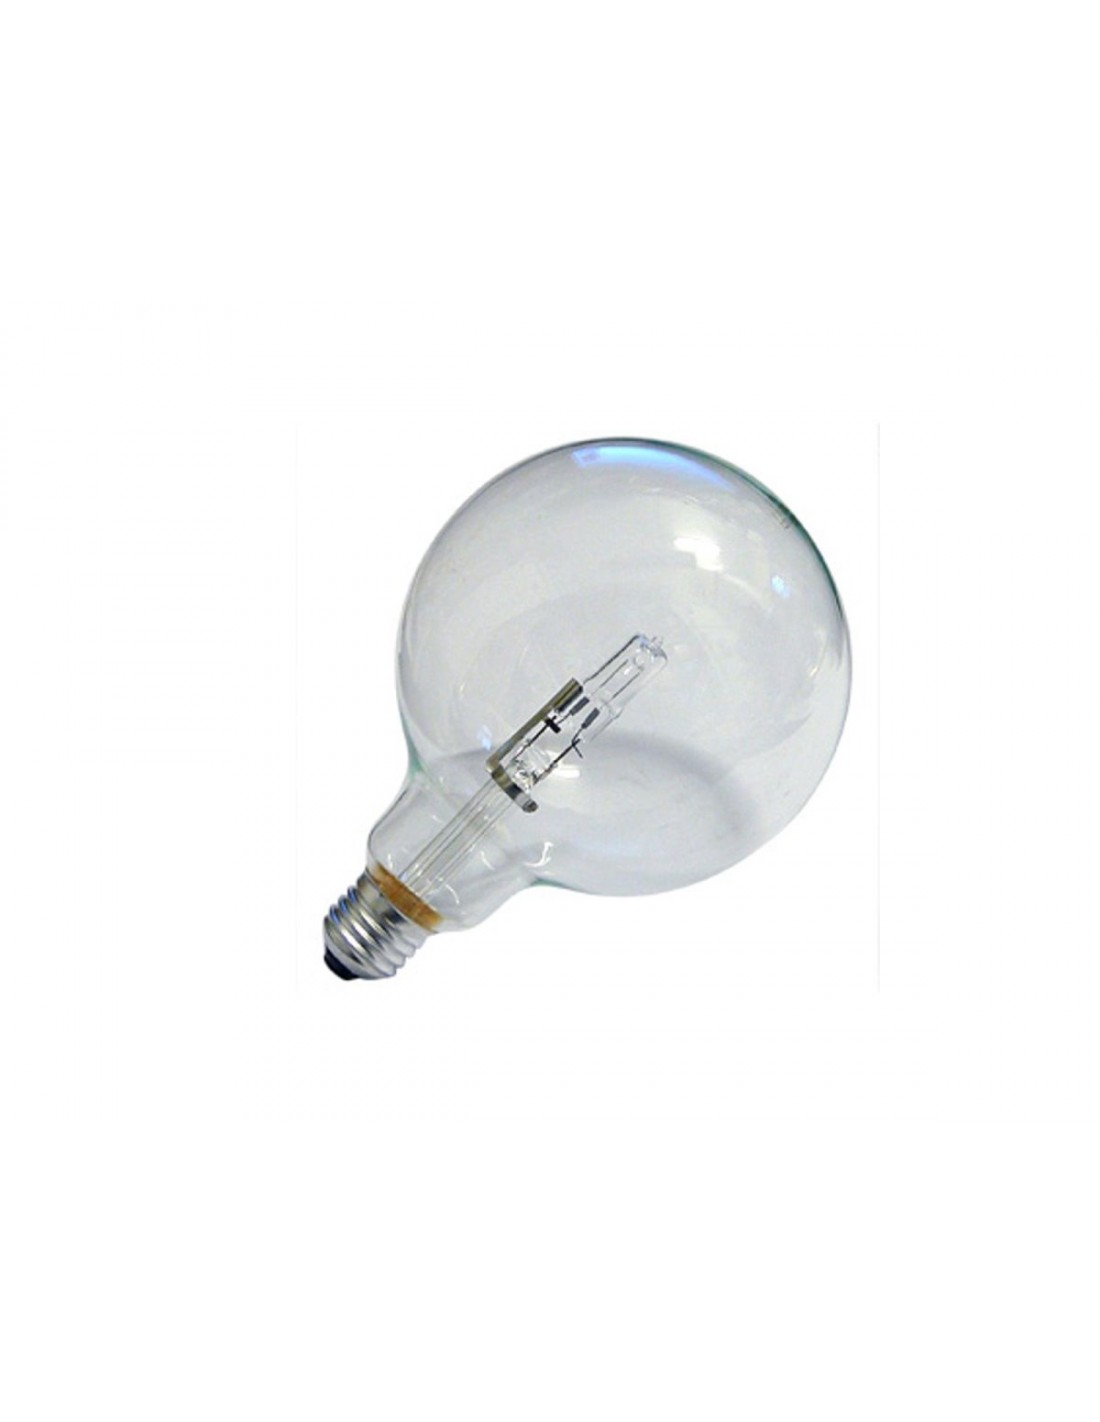 Offerta Lampada Alogena A Risparmio Energetico Attac